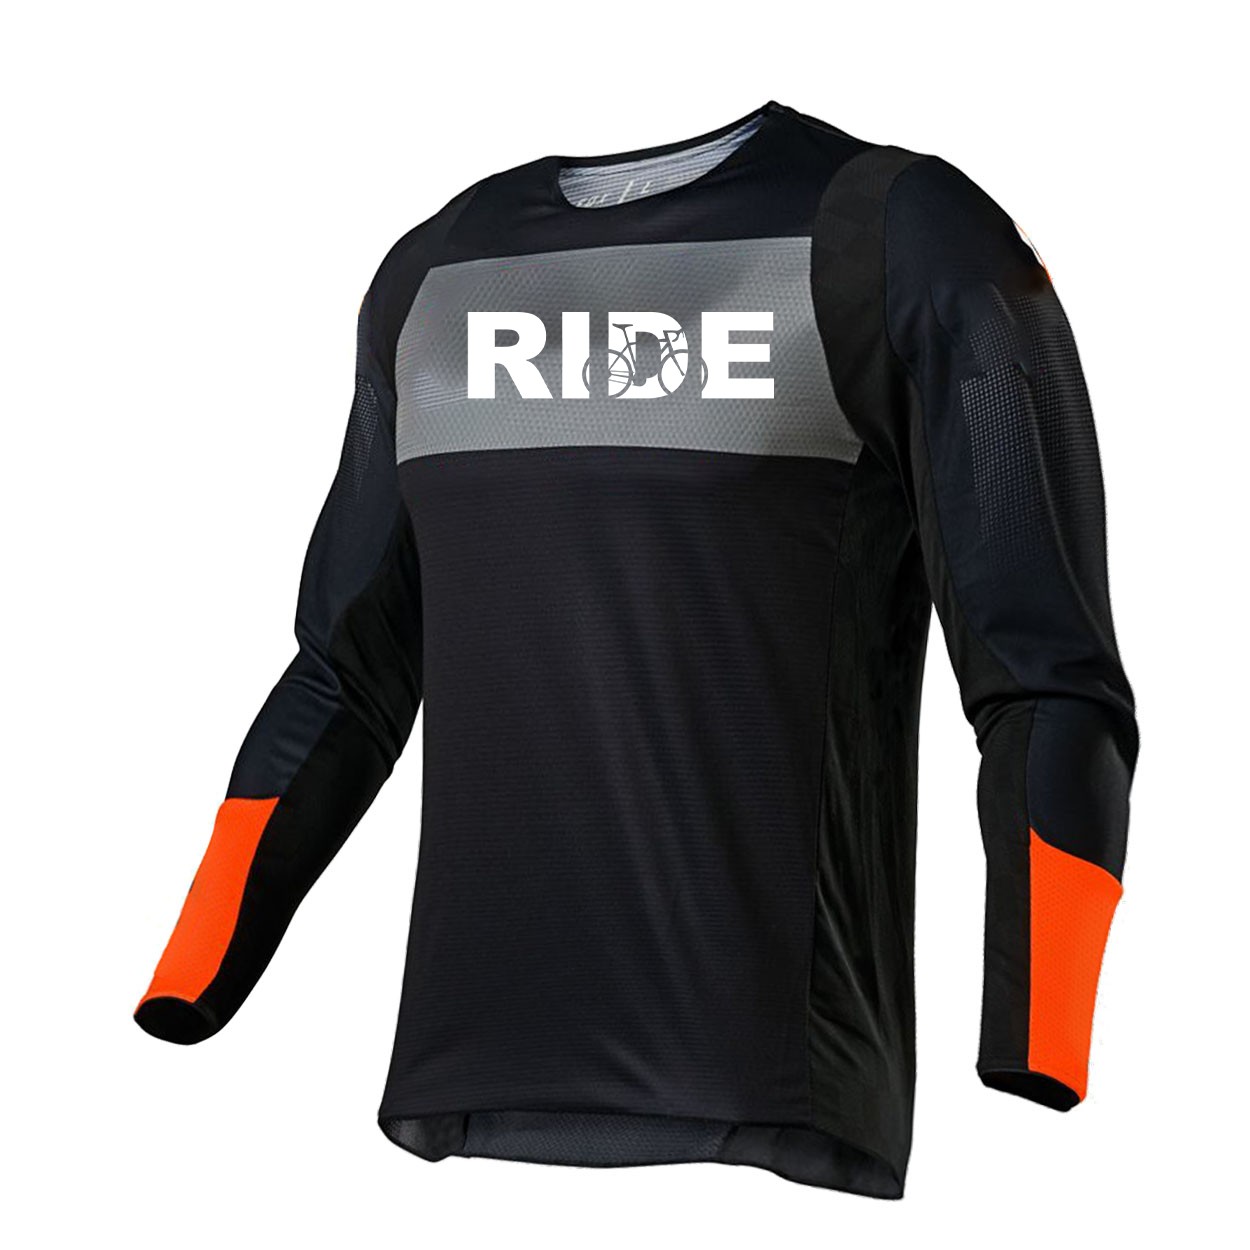 Ride Cycle Logo Classic Performance Jersey Long Sleeve Shirt Black/Gray/Orange